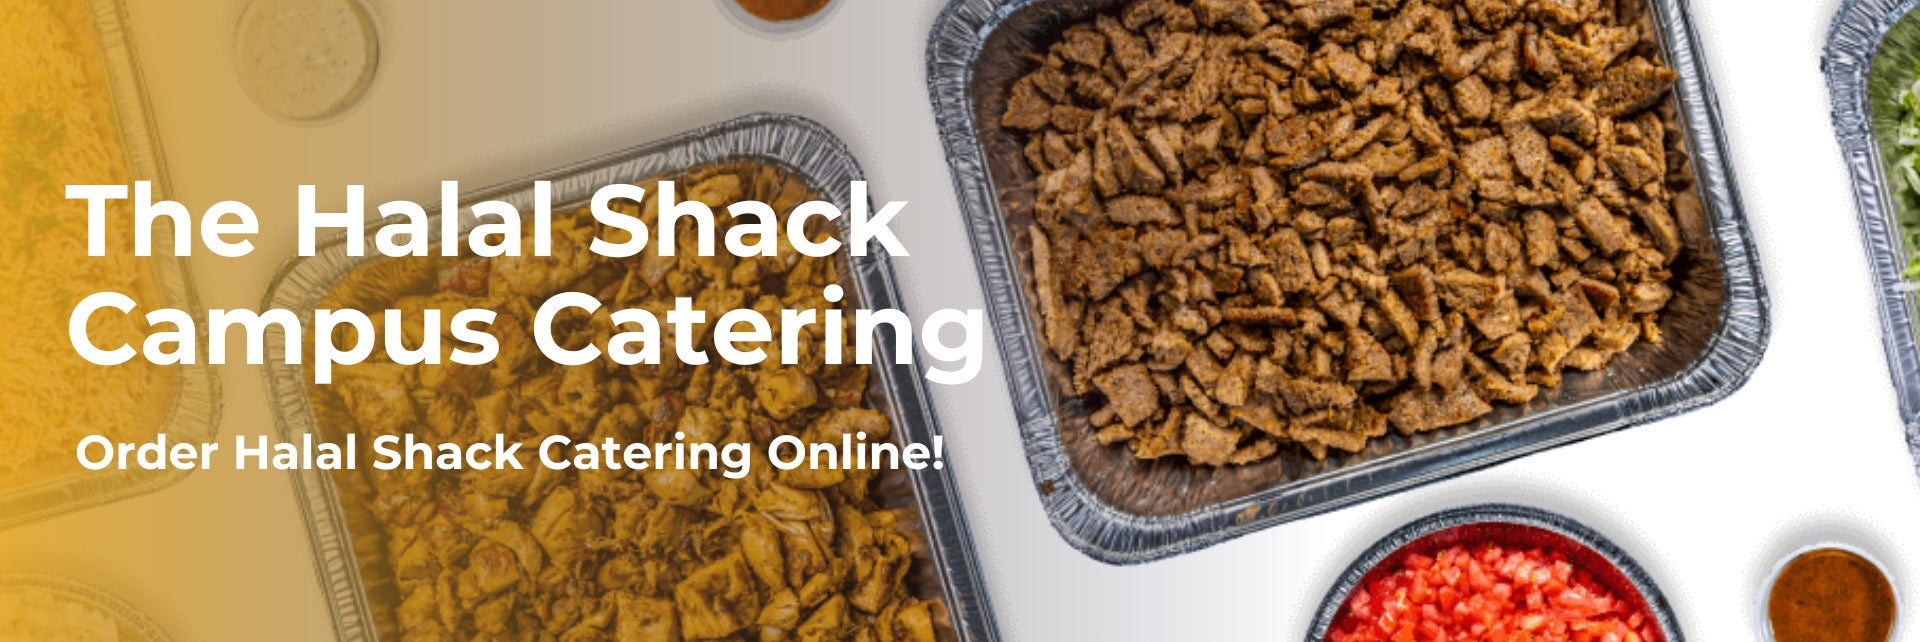 The Halal Shack Campus Catering, Order Halal Shack Catering Online!